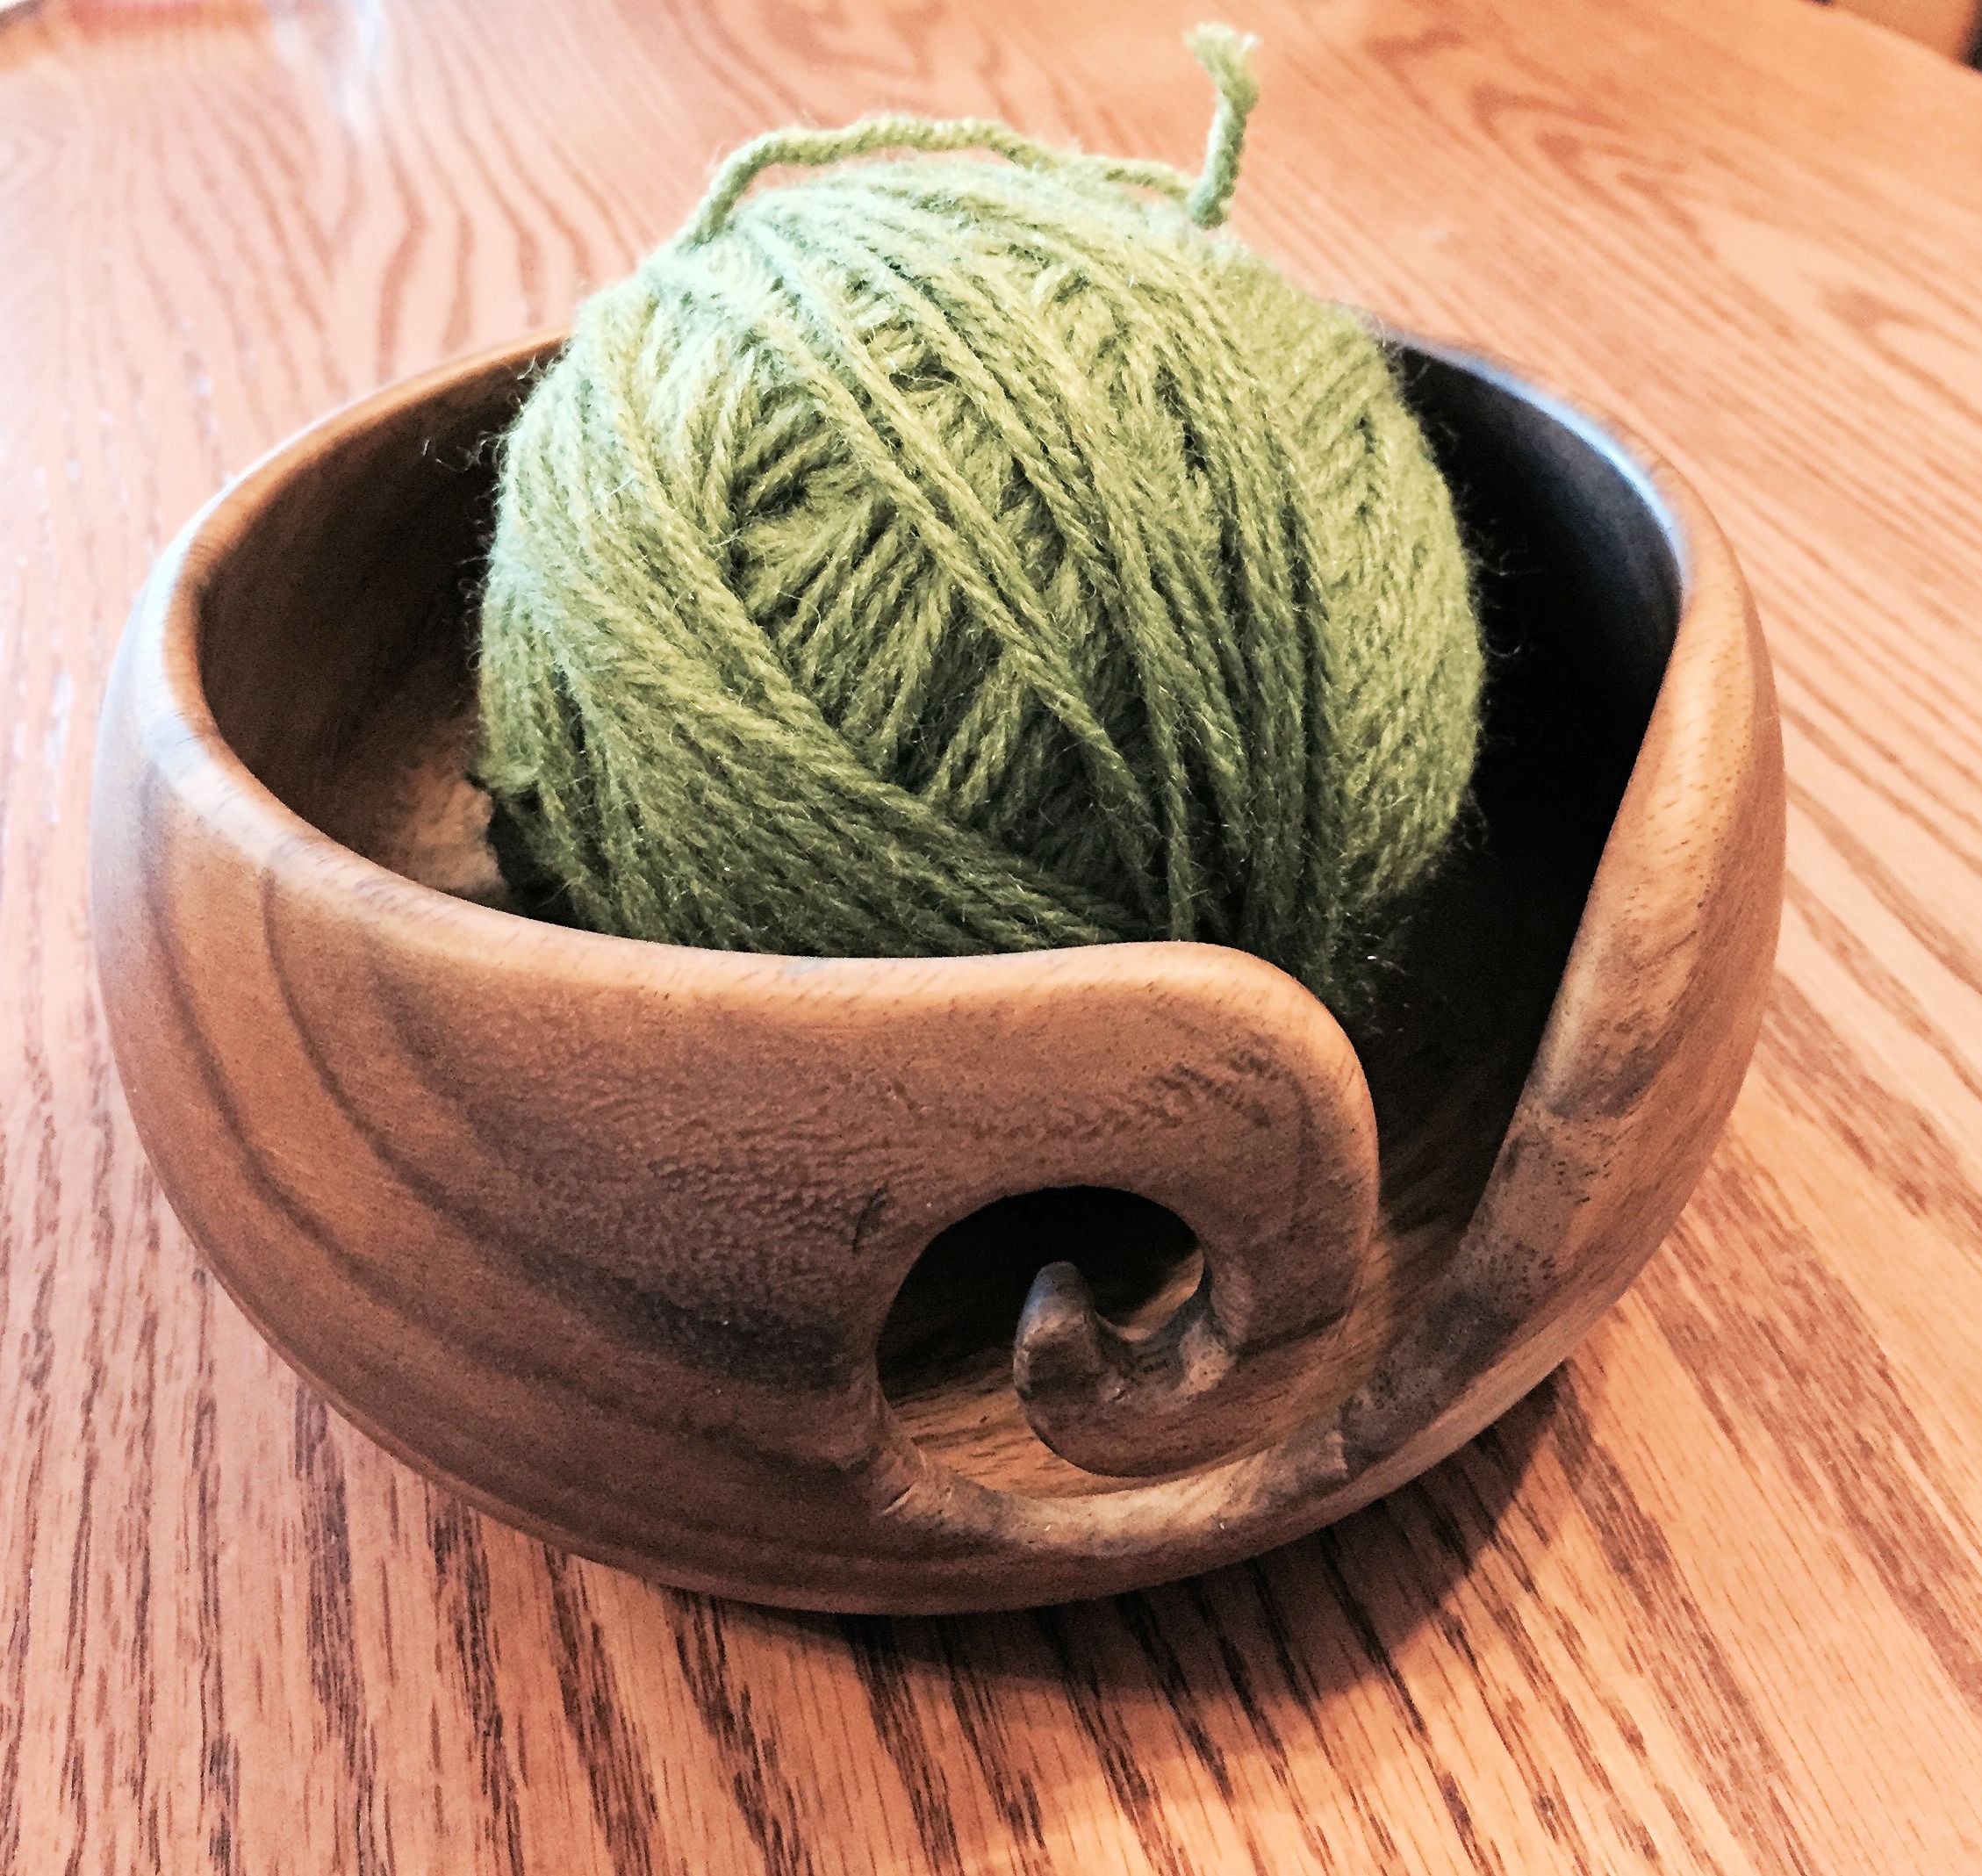 Yarn Bowl-6"x 3" Mango Wooden Handmade Yarn Holder for Knitting & Crocheting 